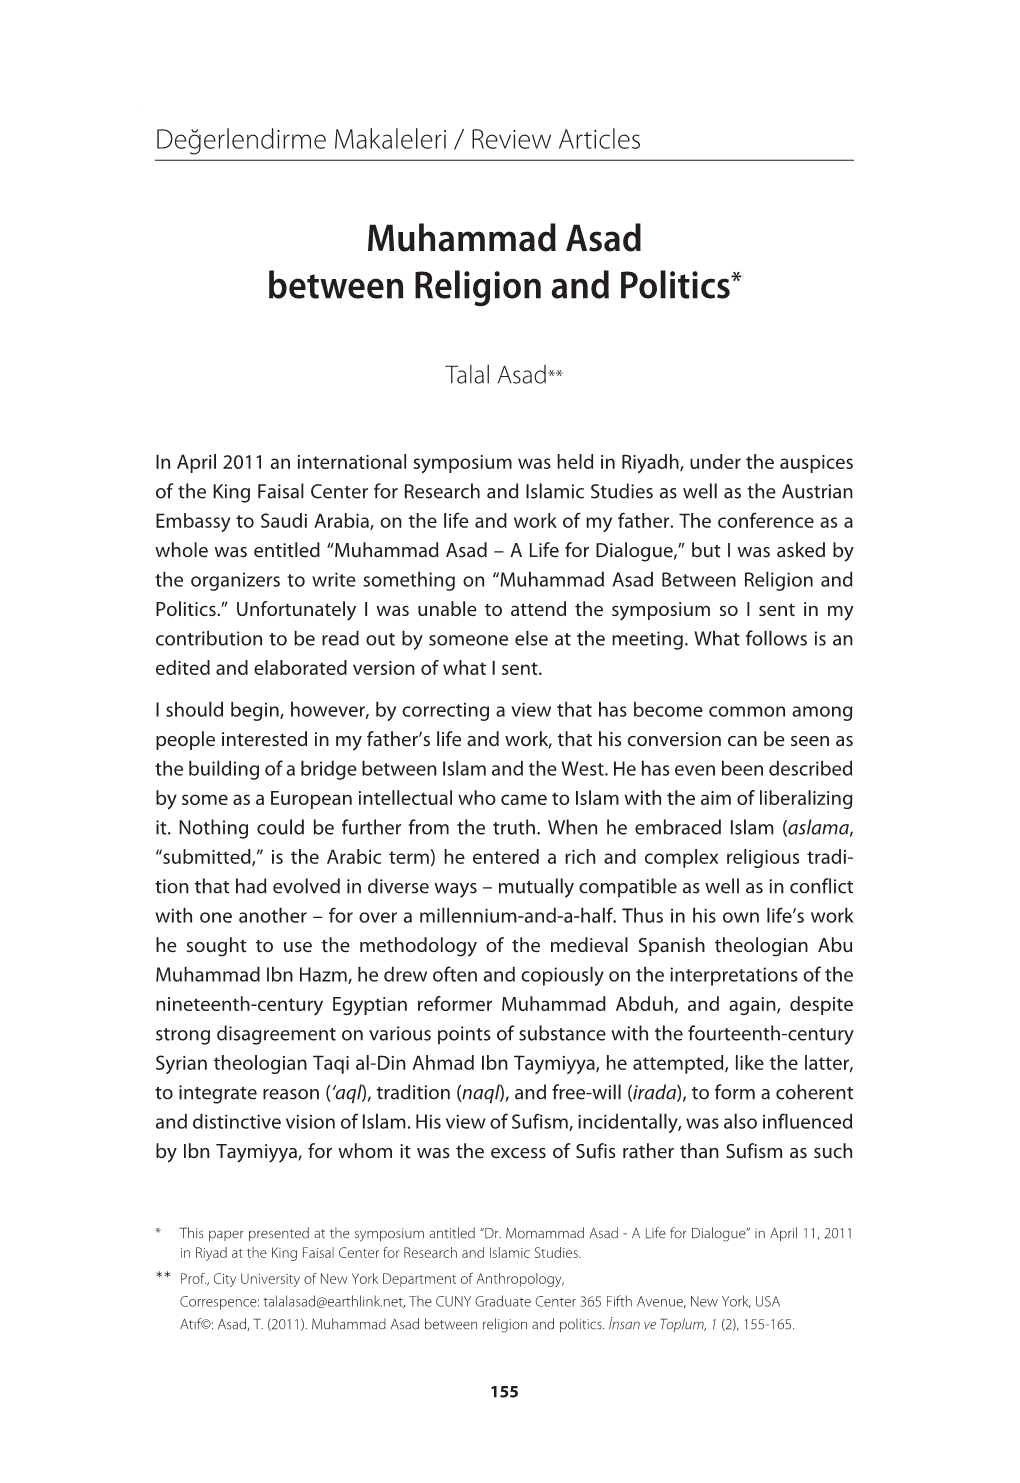 Muhammad Asad Between Religion and Politics*